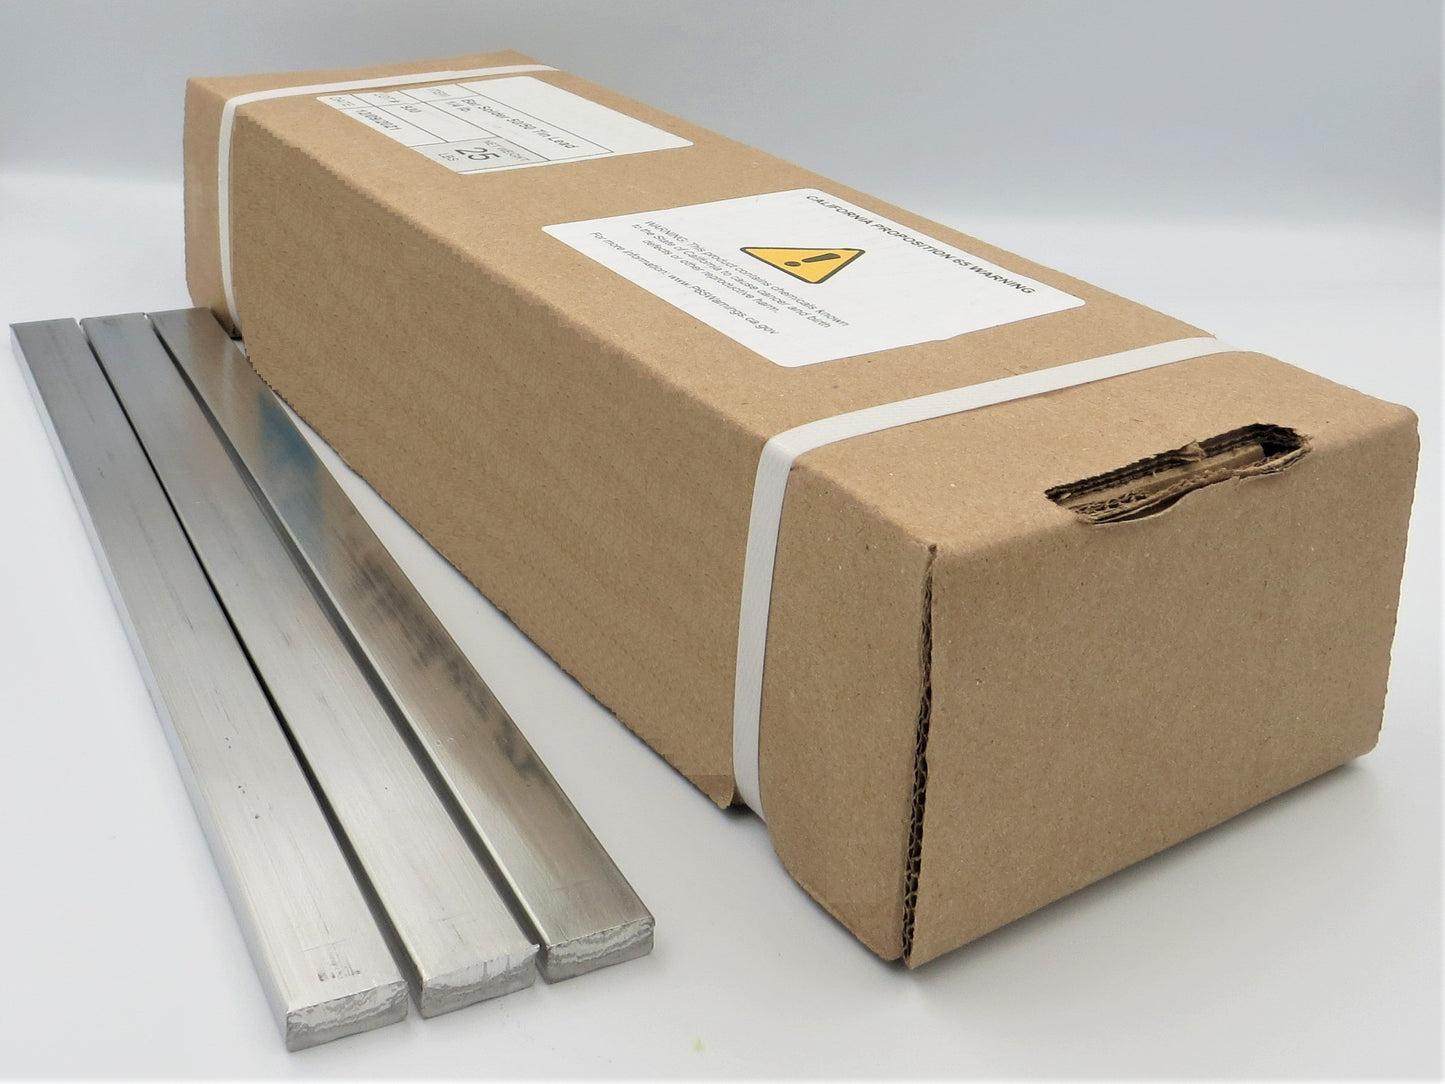 SAC305 Bar Solder - 25 lb. box